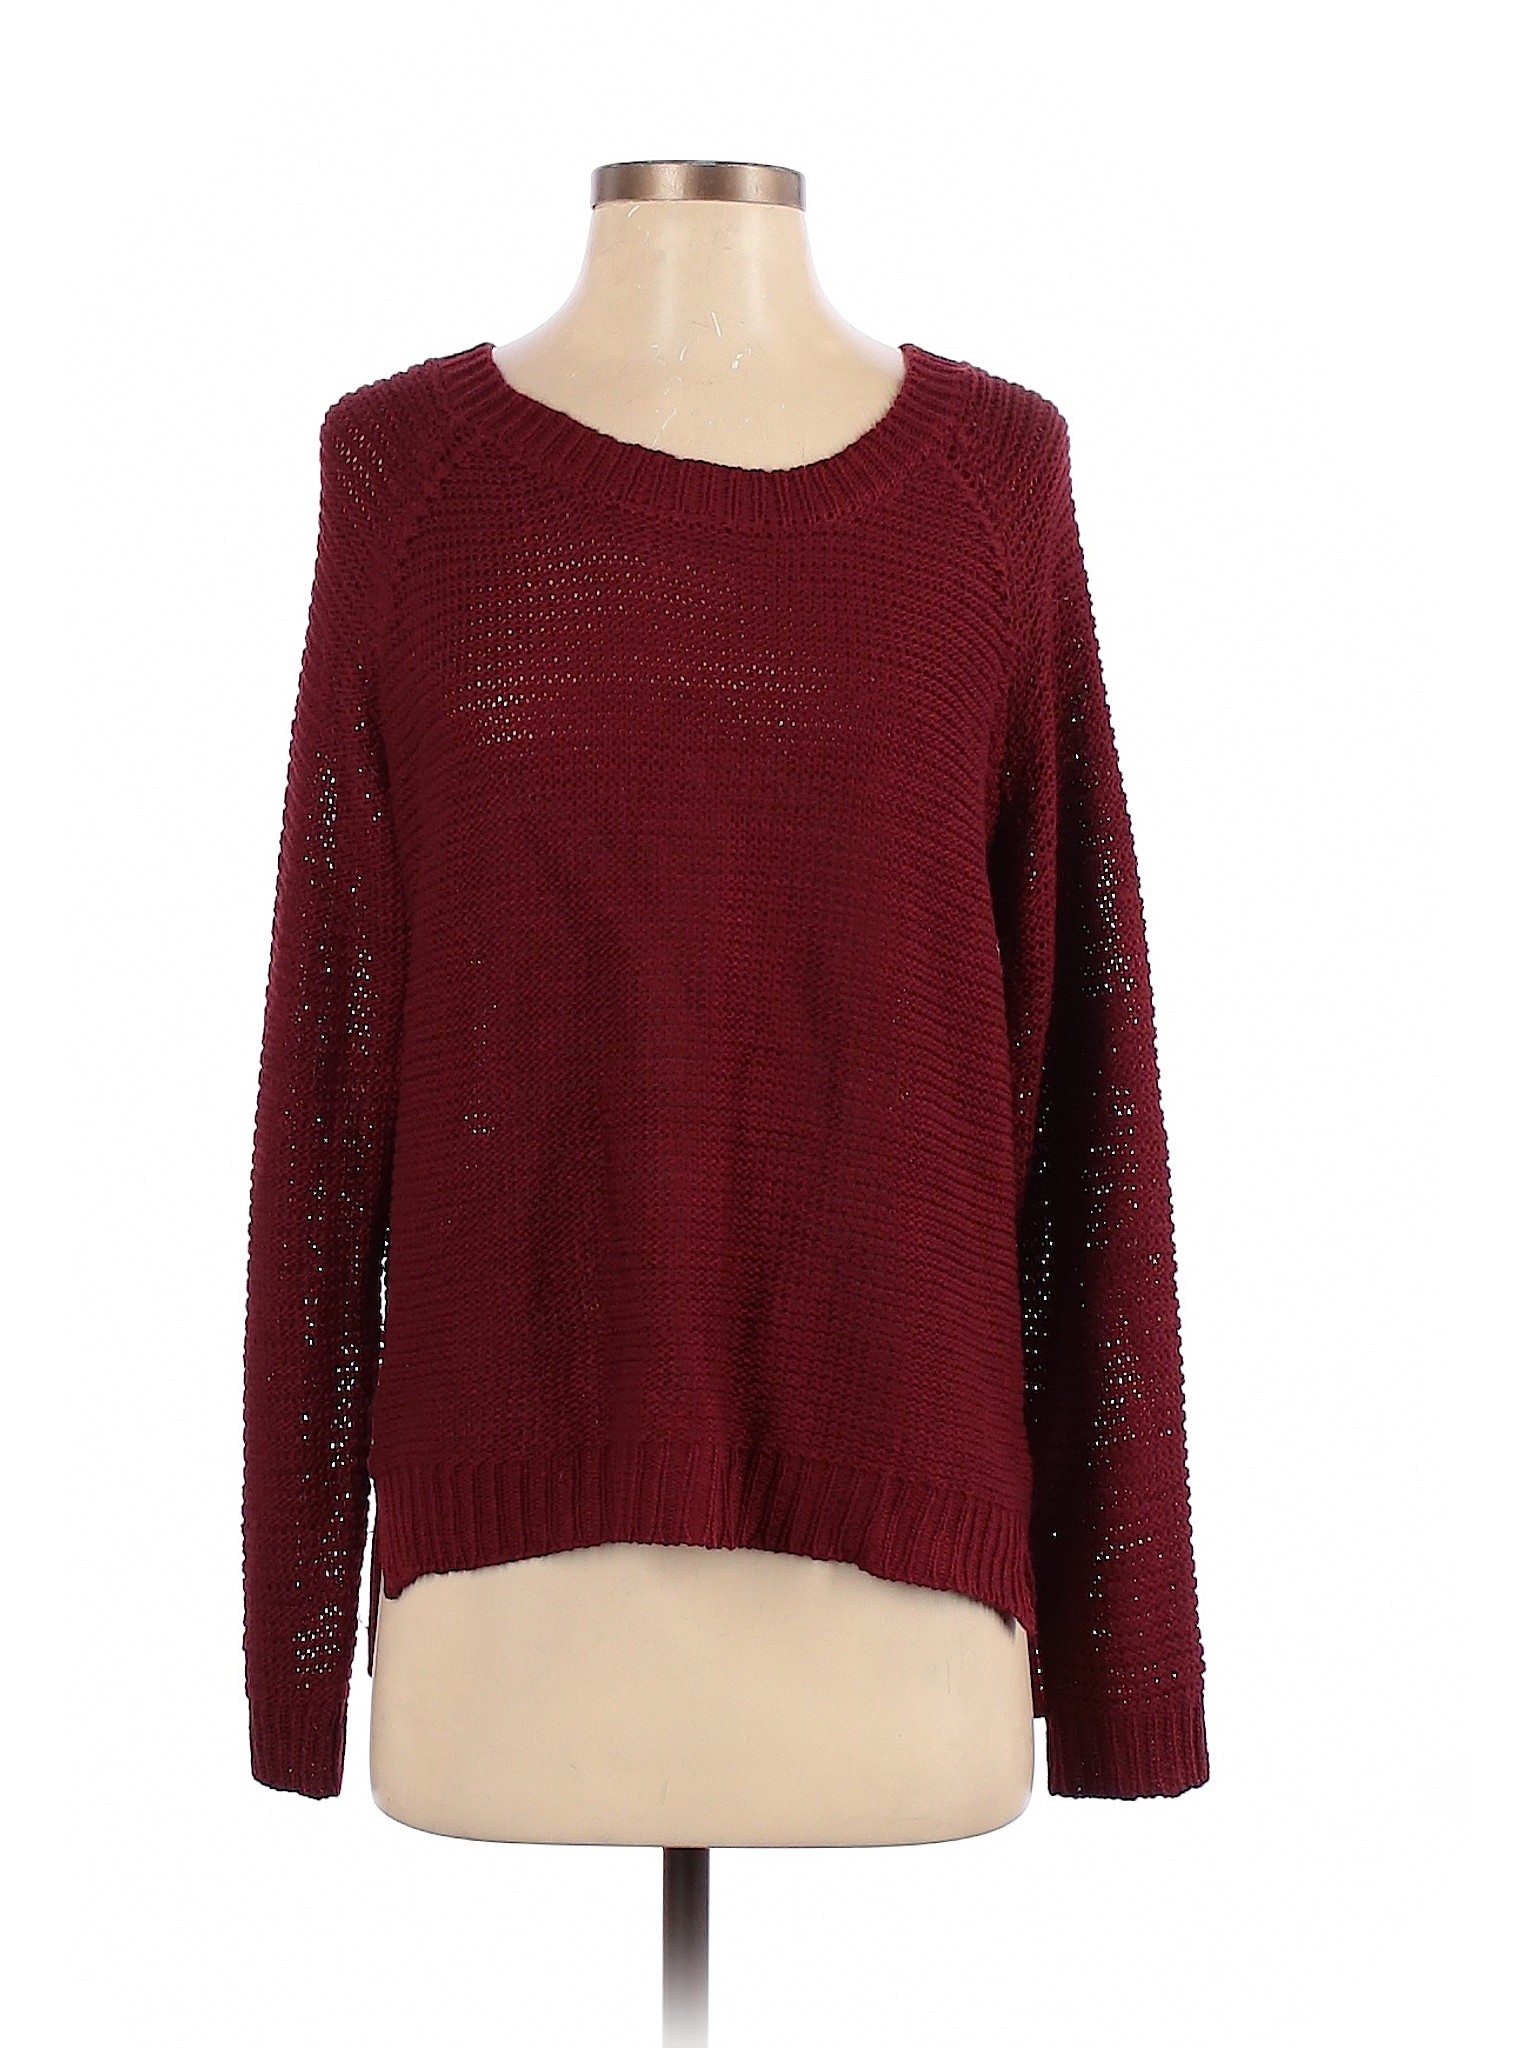 I Love S&S, Inc. Women Red Pullover Sweater S | eBay